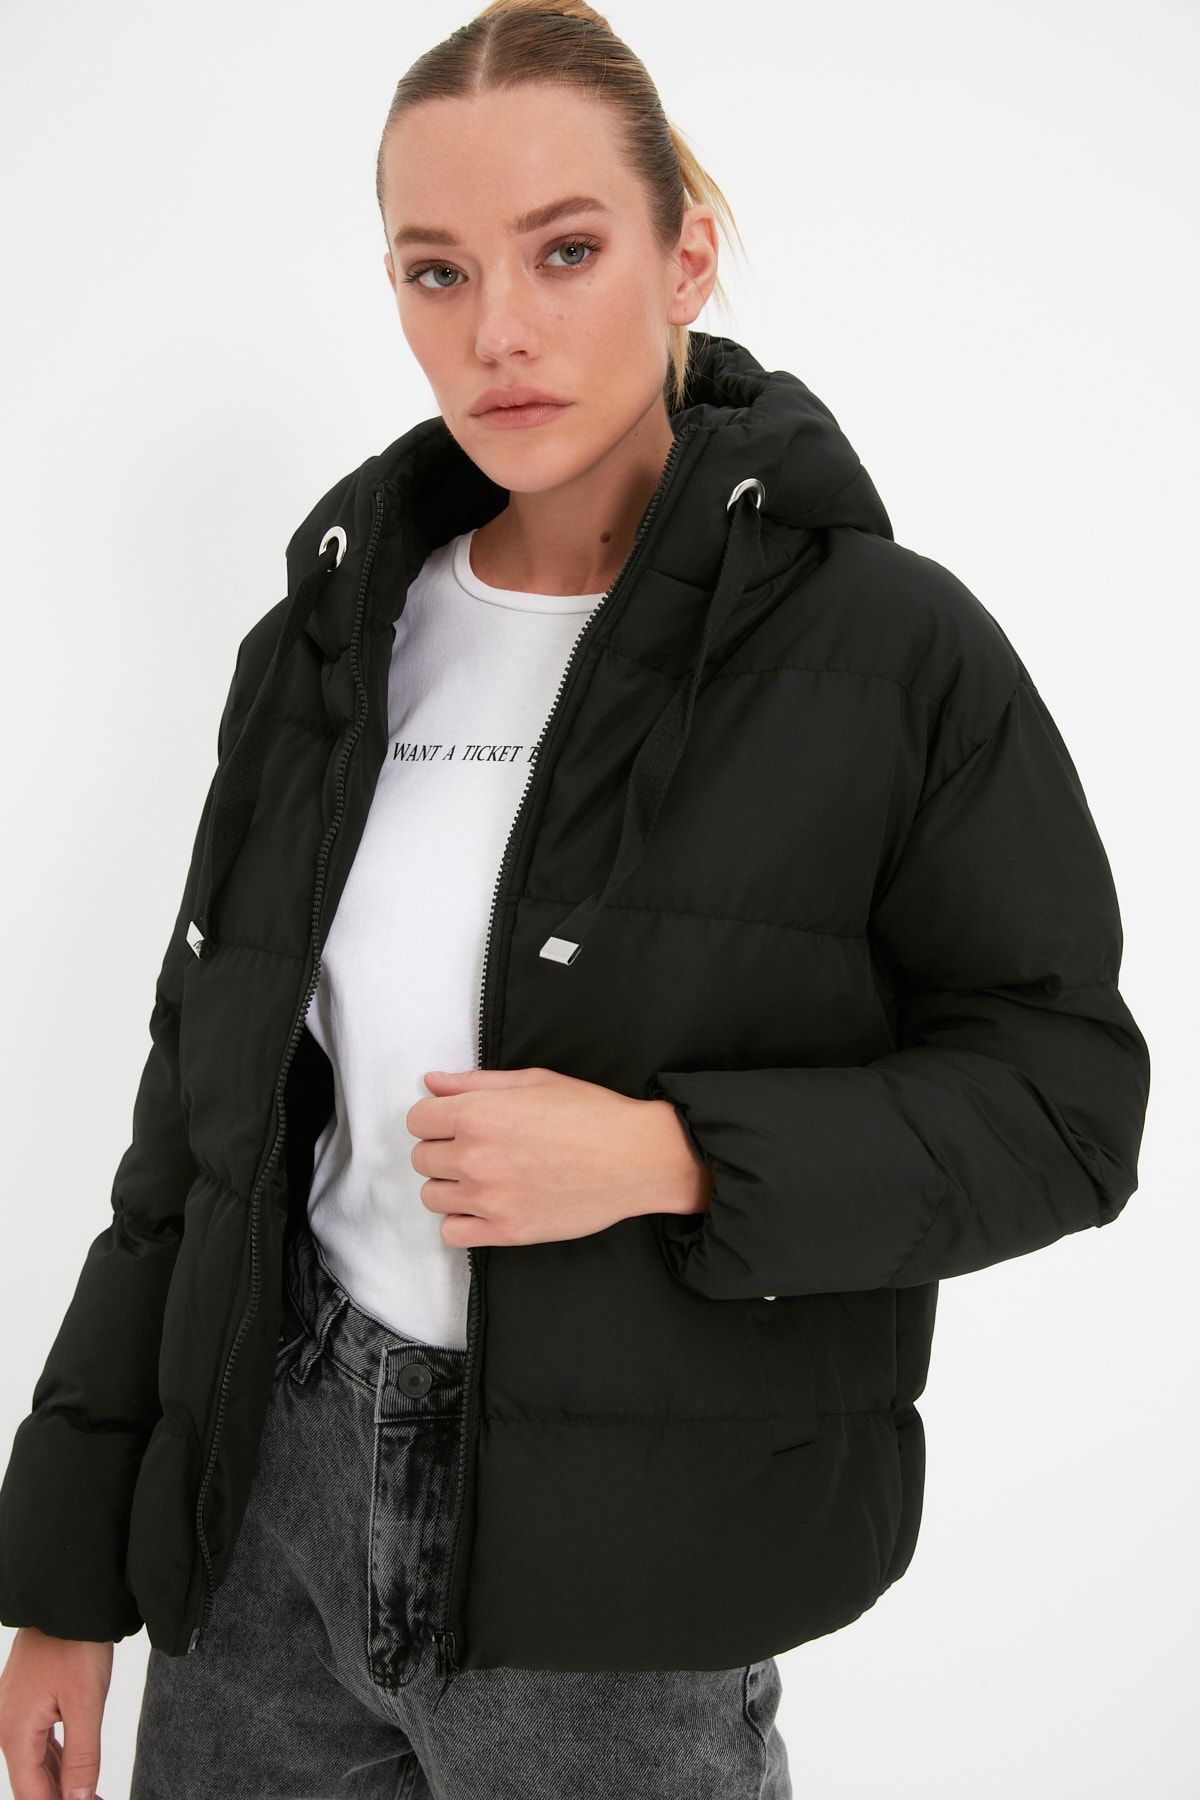 Winter Coat Zipper Jacket Women Wool Coat in Color Black 1363 – XiaoLizi